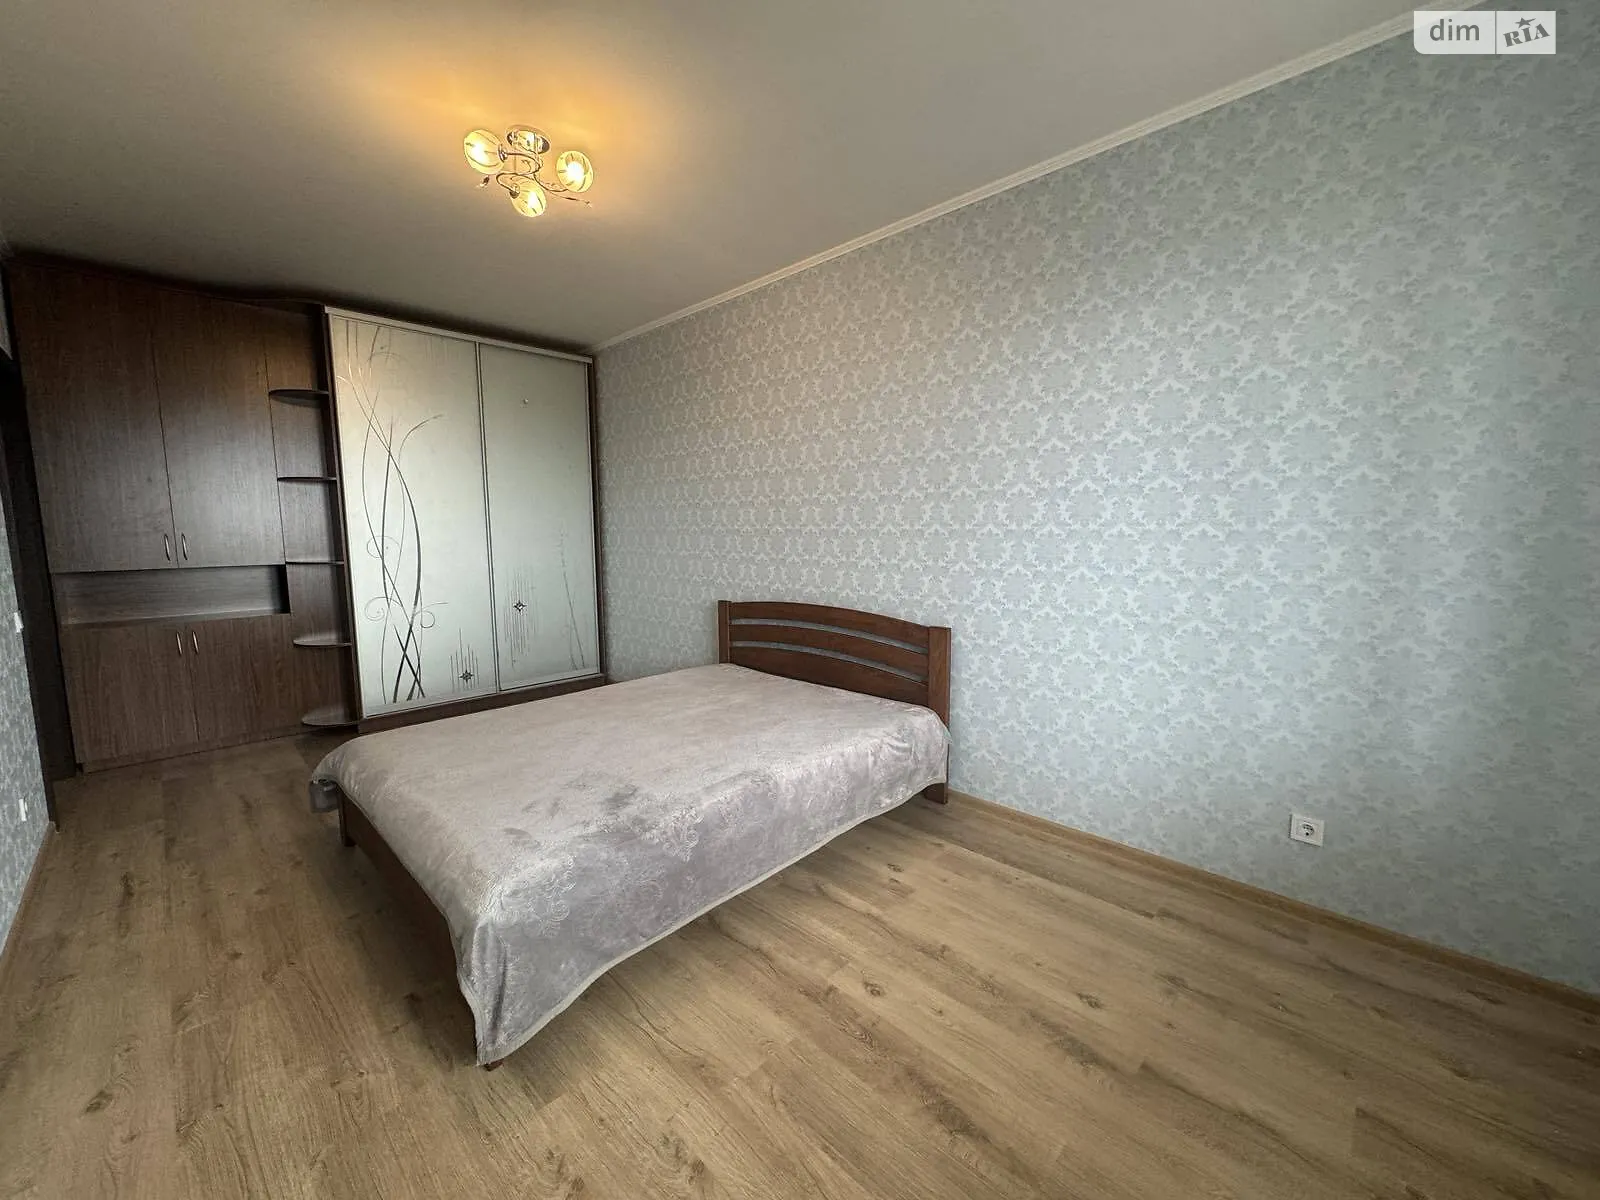 Сдается в аренду 2-комнатная квартира 61 кв. м в Николаеве - фото 3